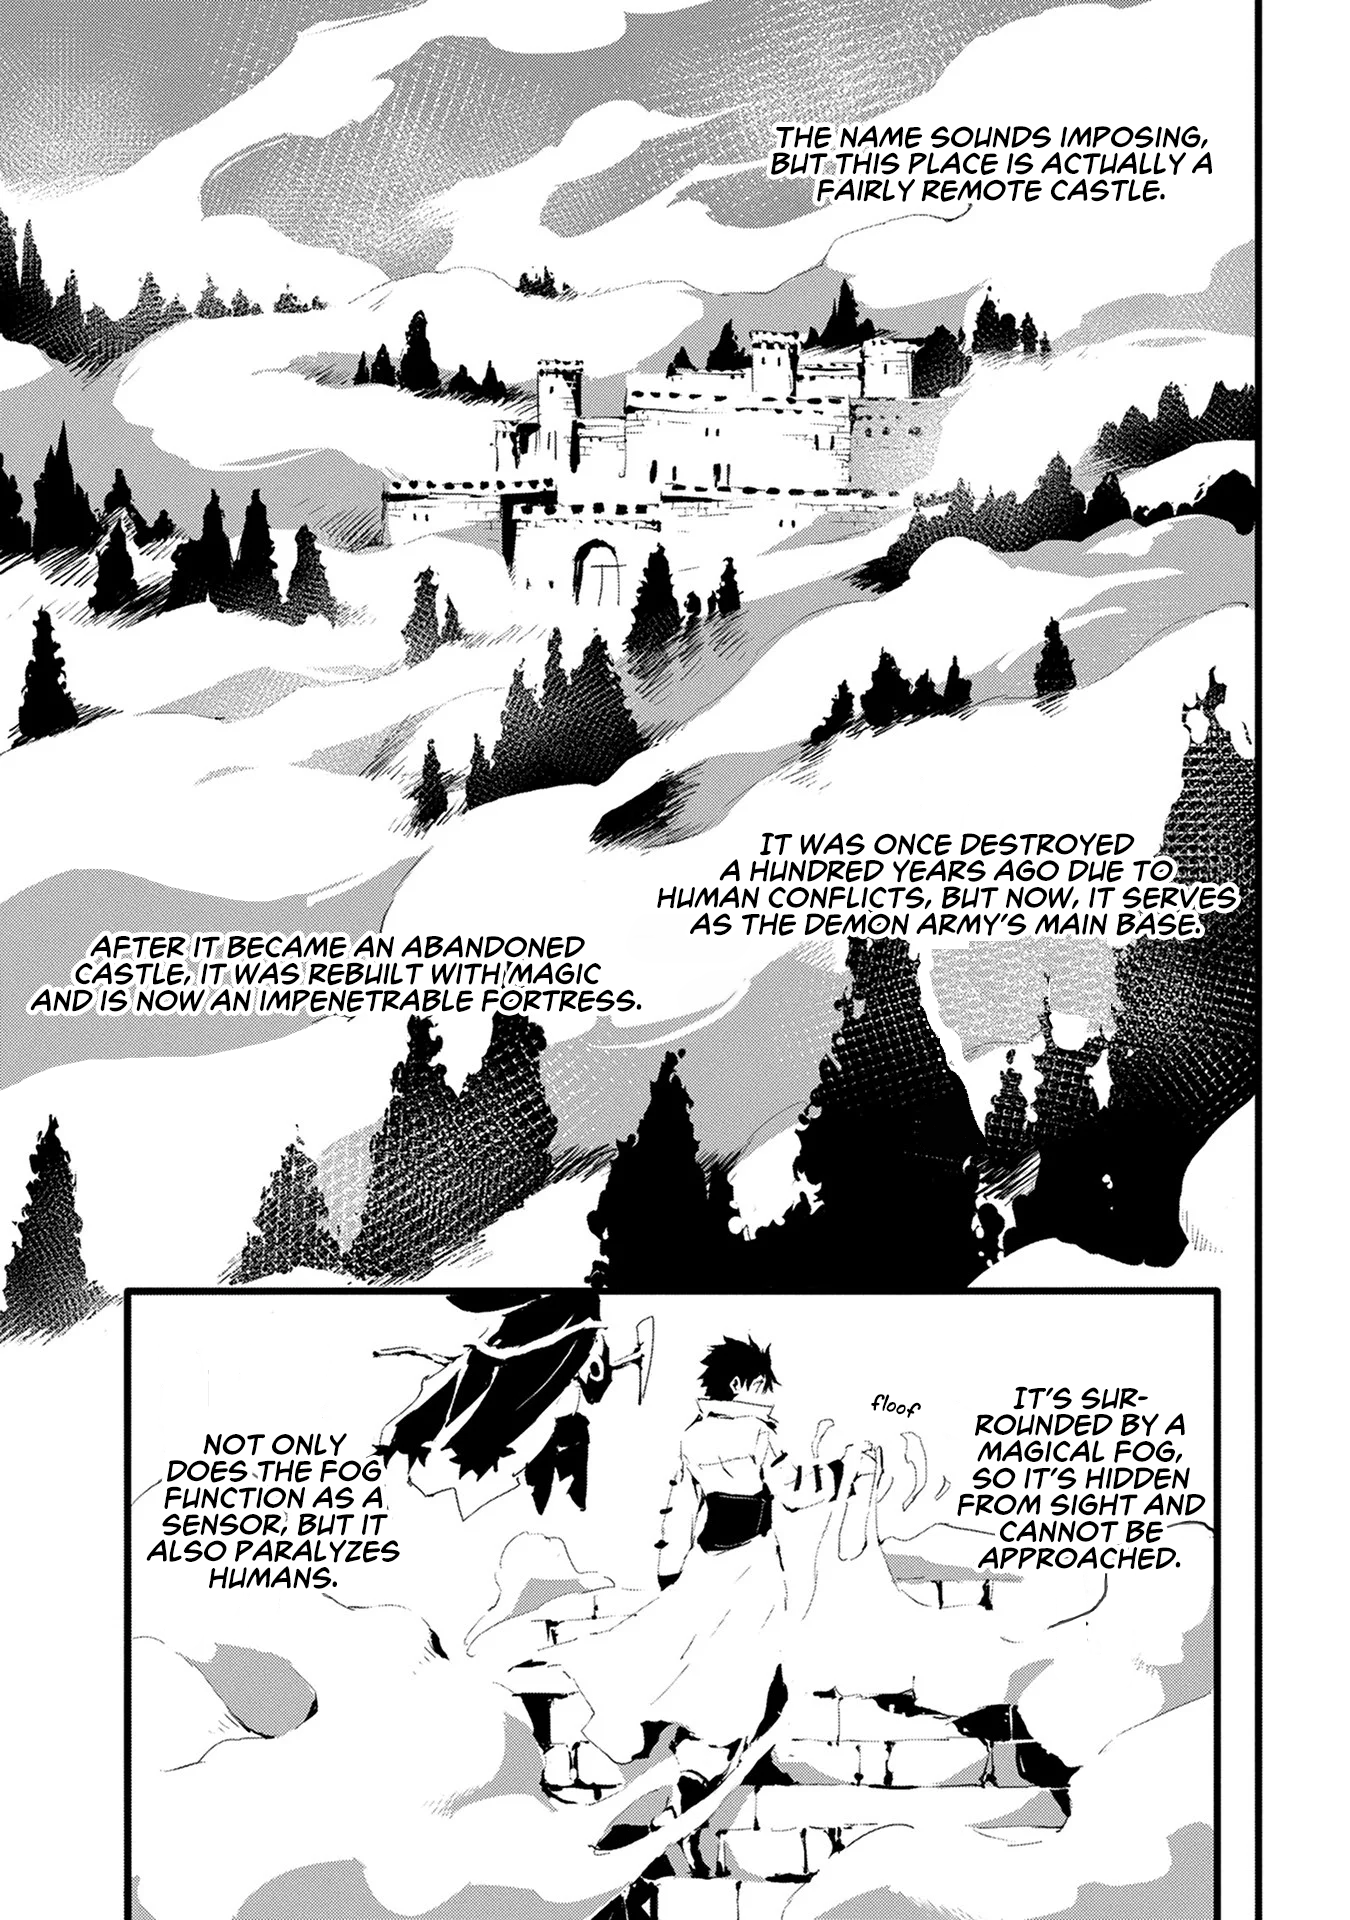 Jinrou E No Tensei, Maou No Fukkan: Hajimari No Shou Vol.2 Chapter 7: The Demon Lord's Headquarters - Picture 3